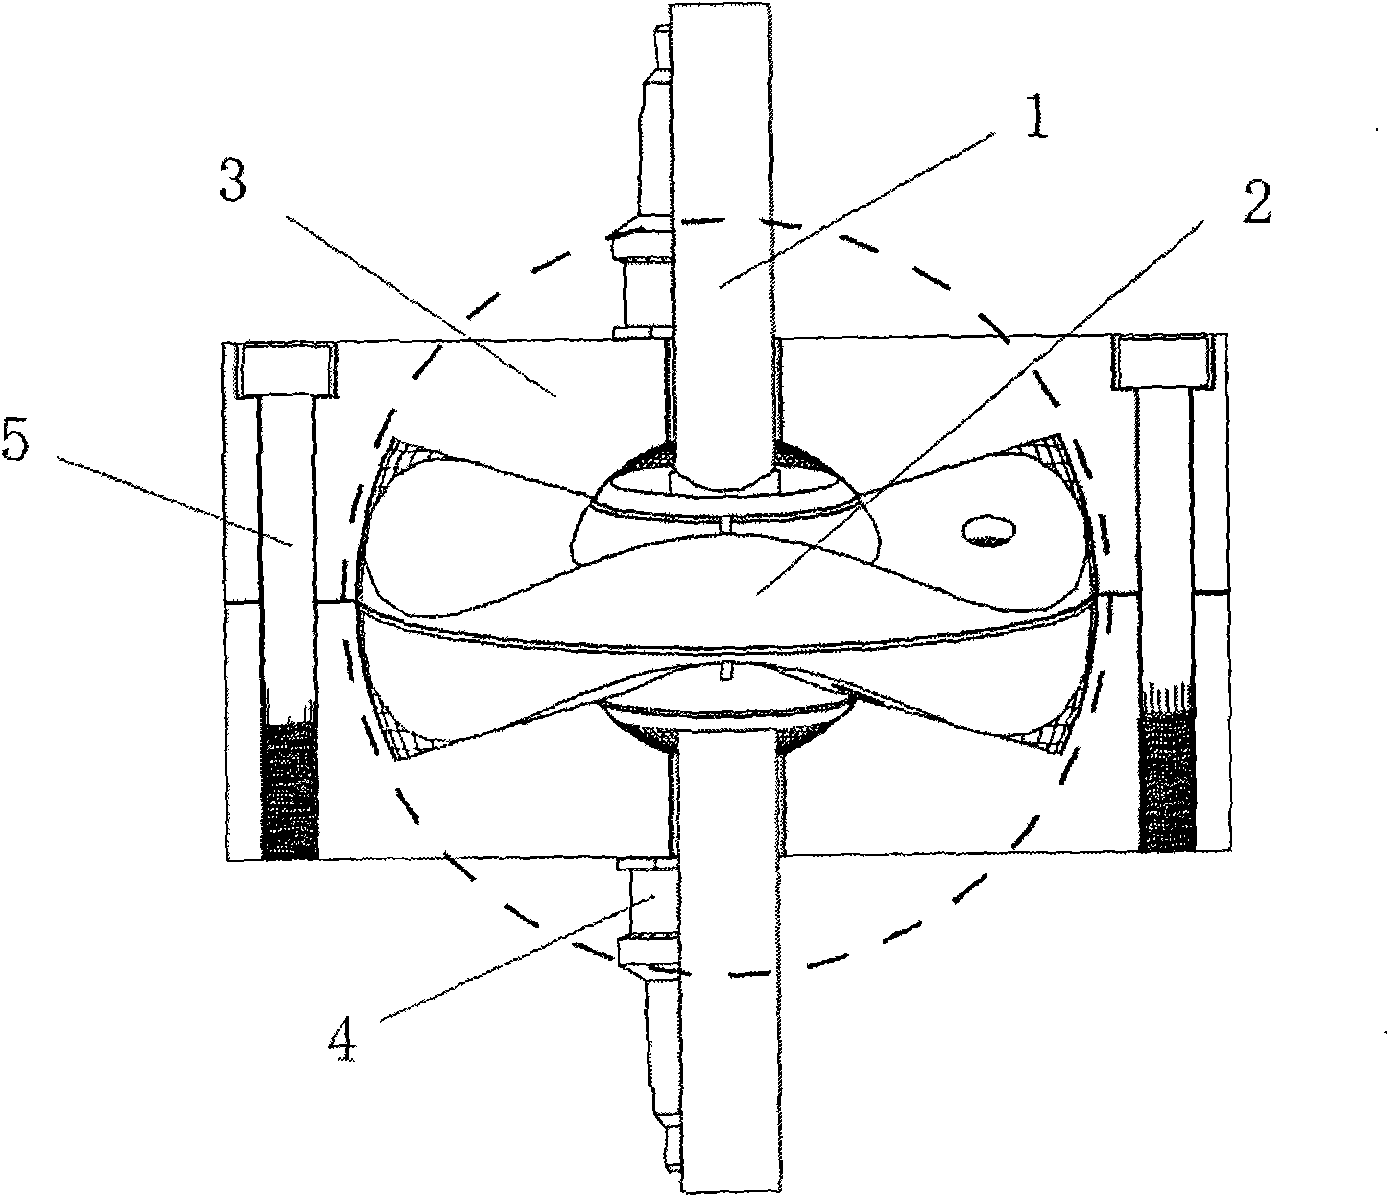 Precession rotary engine